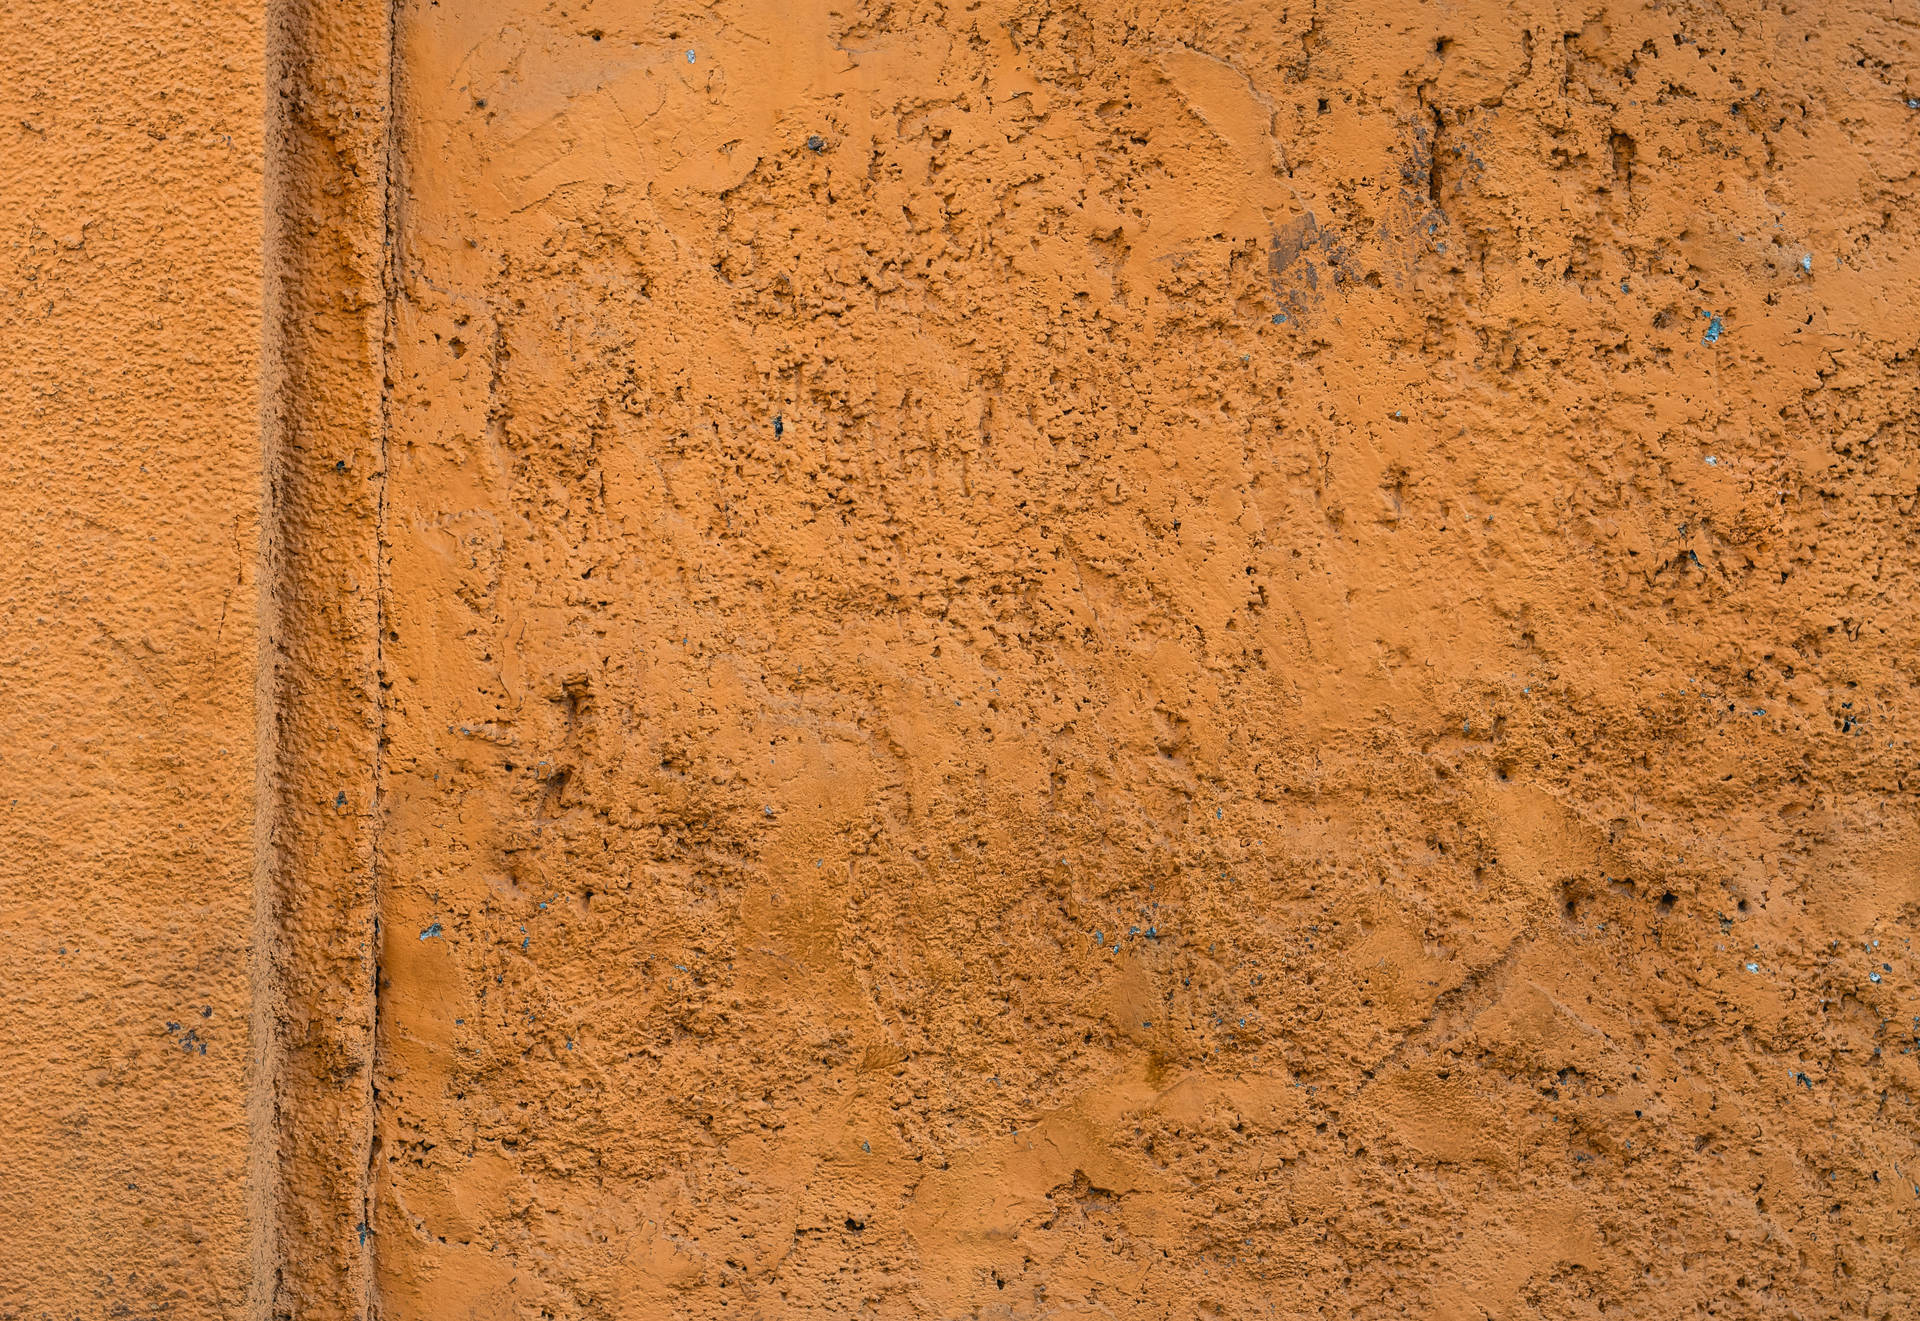 Textured Orange Stone Wall Desktop Wallpaper